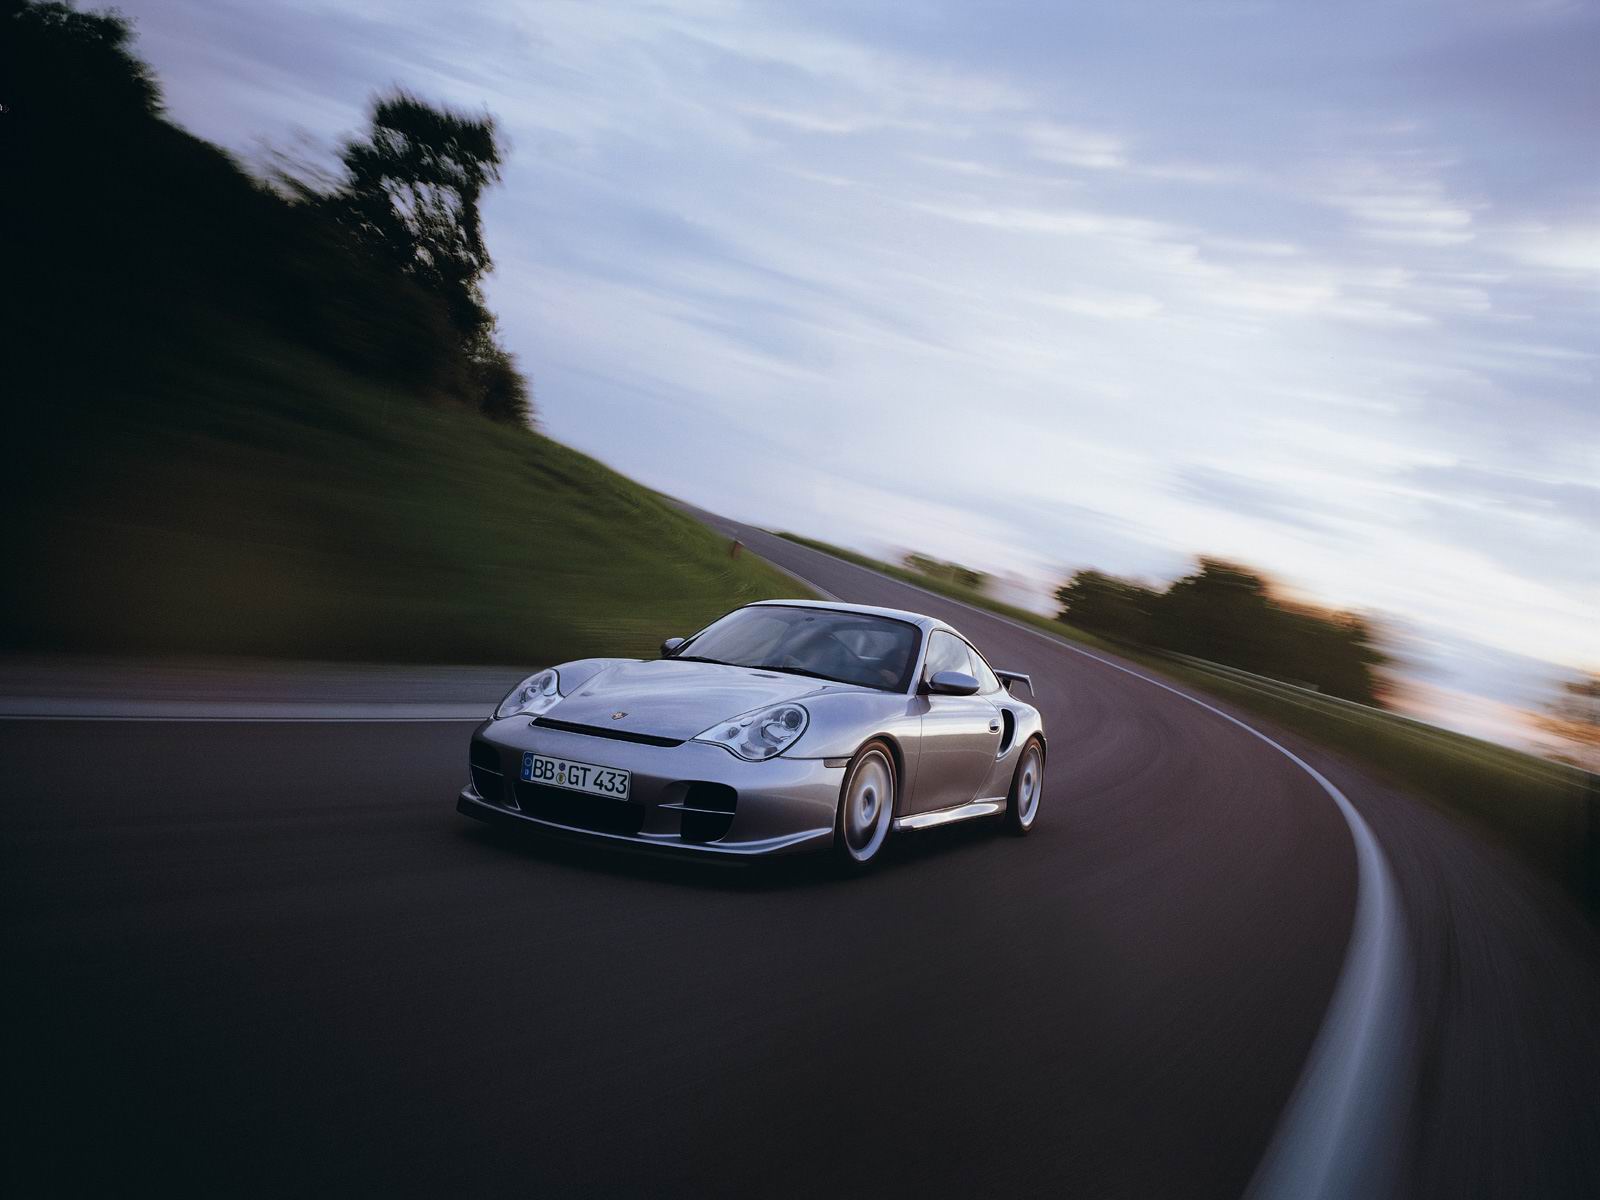 Porsche 996 911 GT2 Cars Wallpapers | Car Pictures | Cars Wallpaper